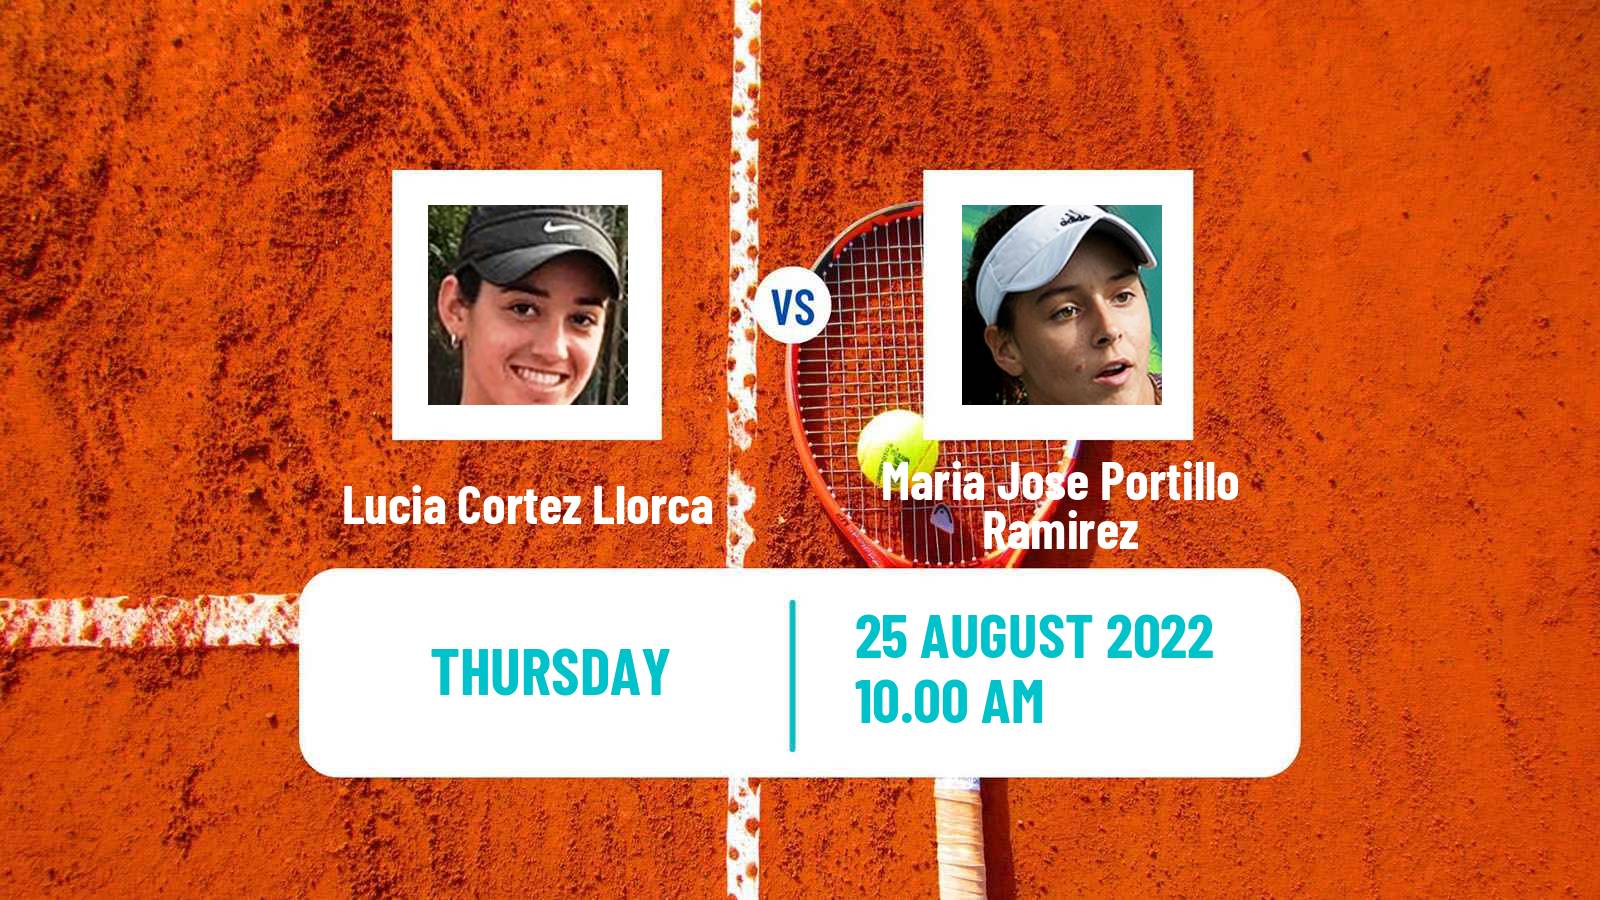 Tennis ITF Tournaments Lucia Cortez Llorca - Maria Jose Portillo Ramirez